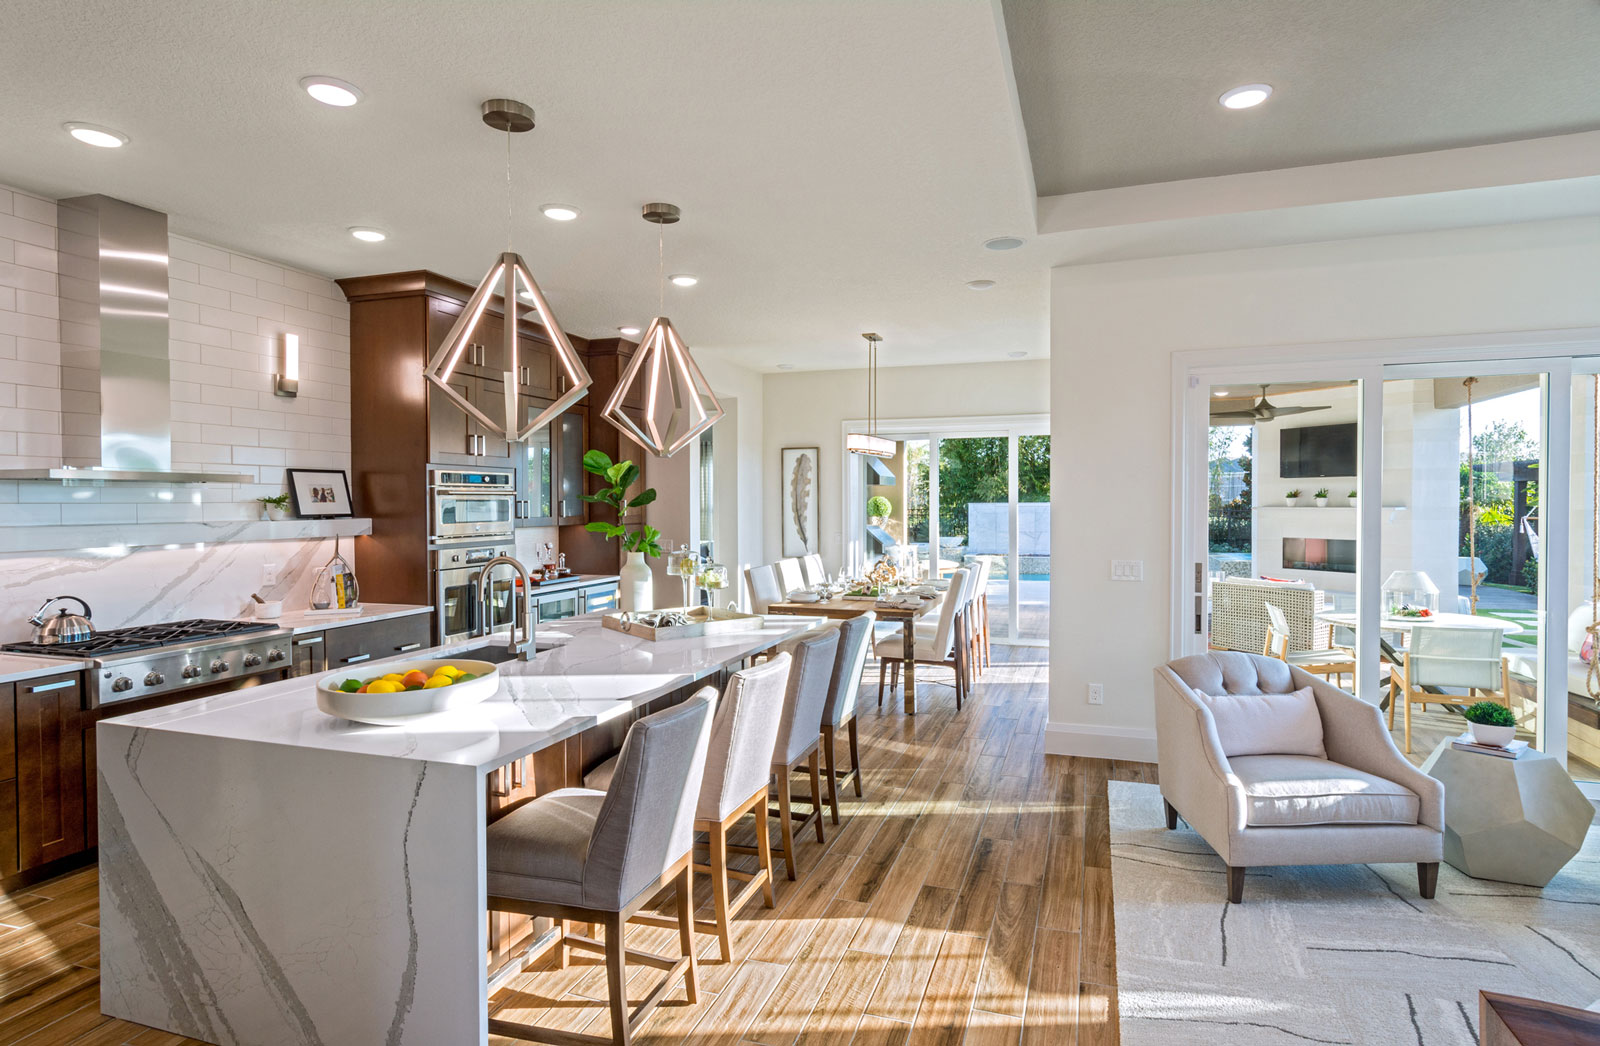 Award winning 55+ model home kitchen with and open floorplan, unique white backsplash, and hardwood floors in Florida.